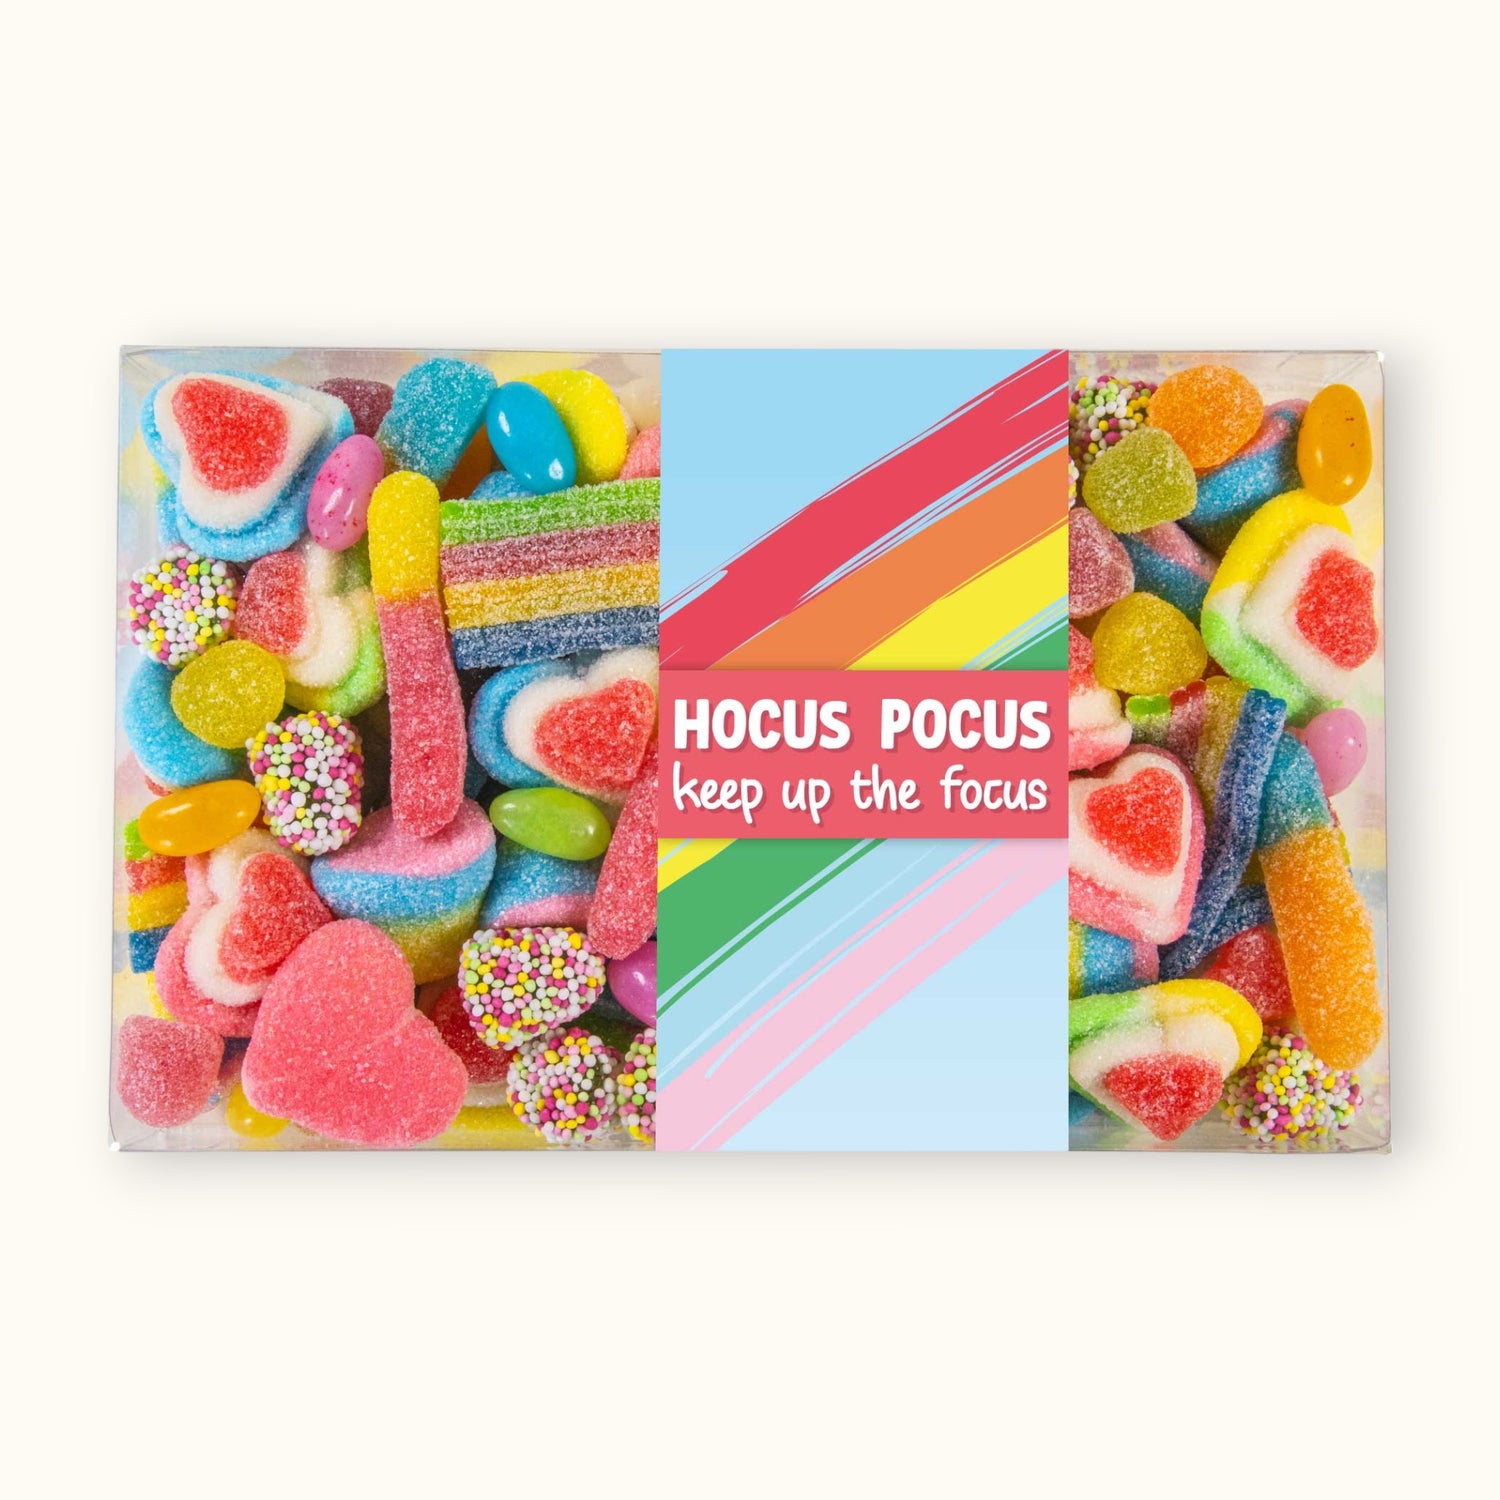 Snoepdoosje | Hocus pocus, keep up the focus!